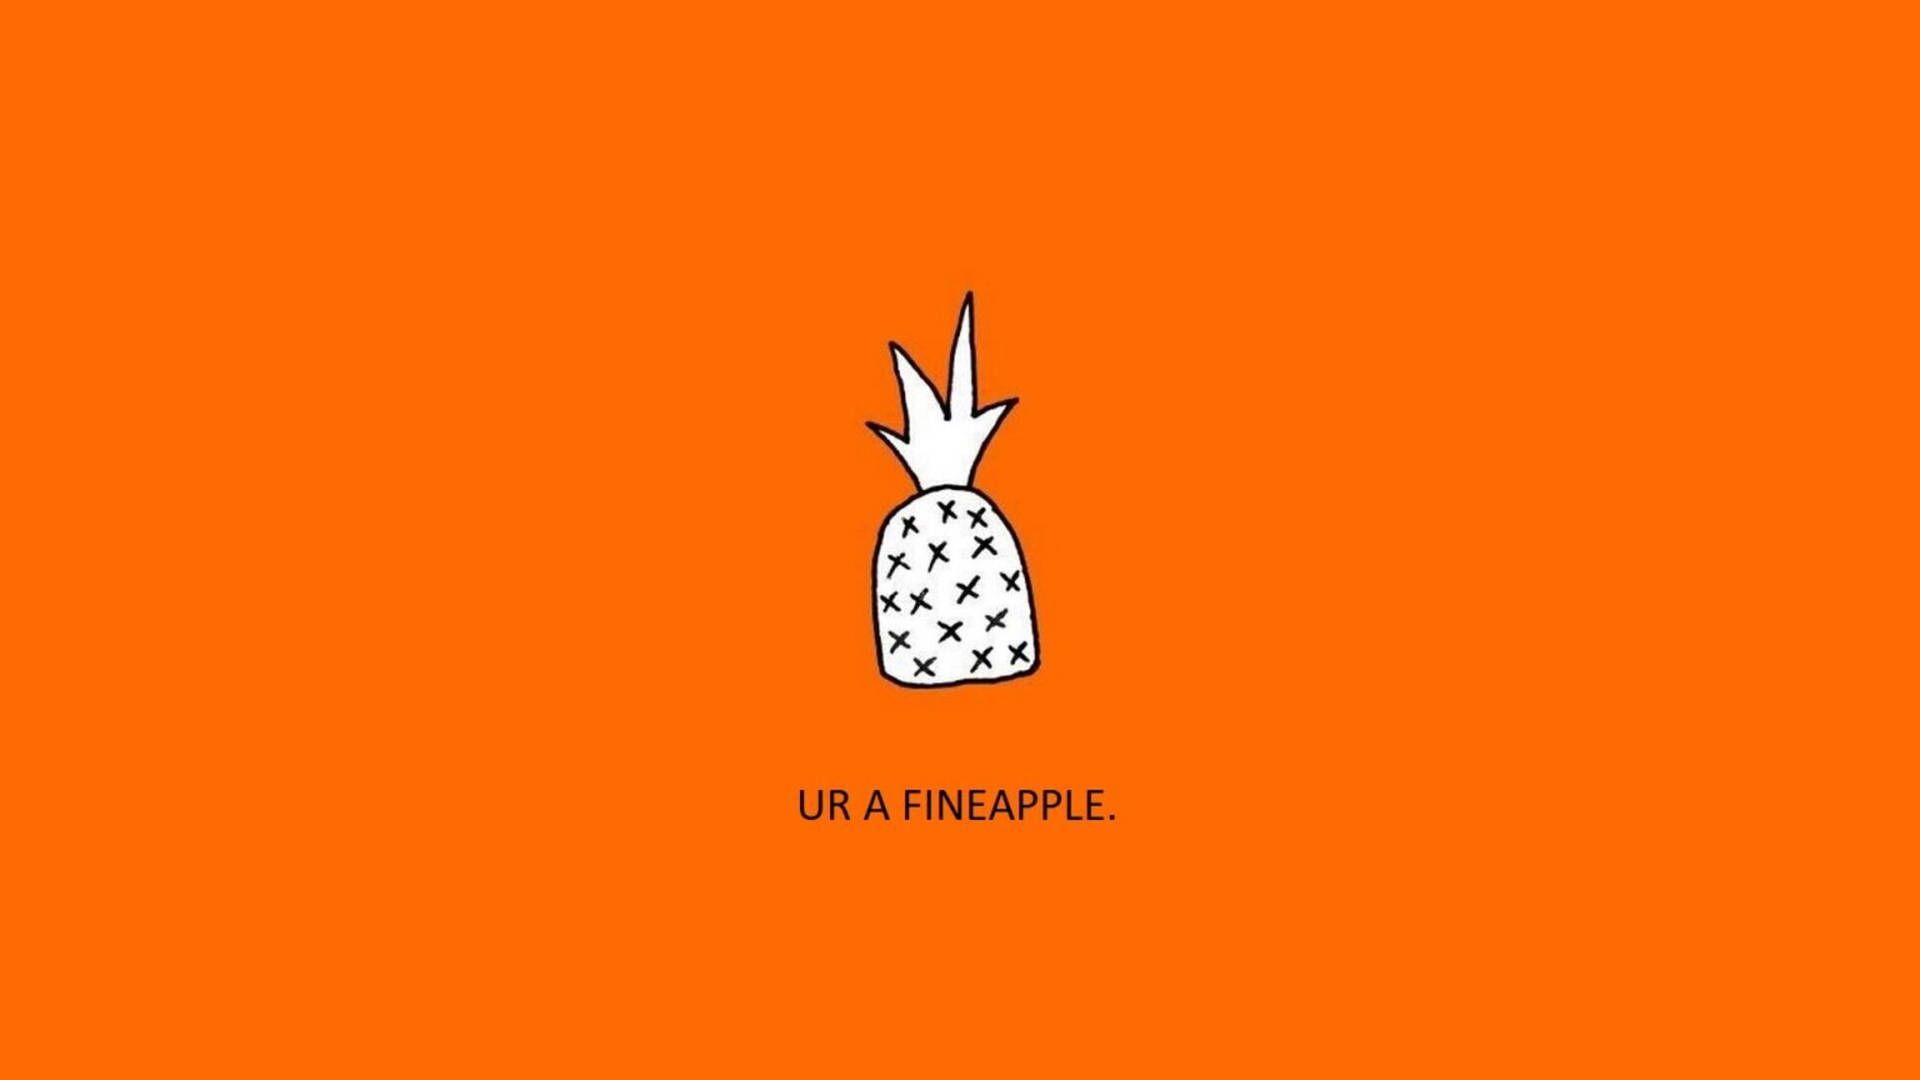 Download Minimalist Pineapple Orange Aesthetic Wallpaper